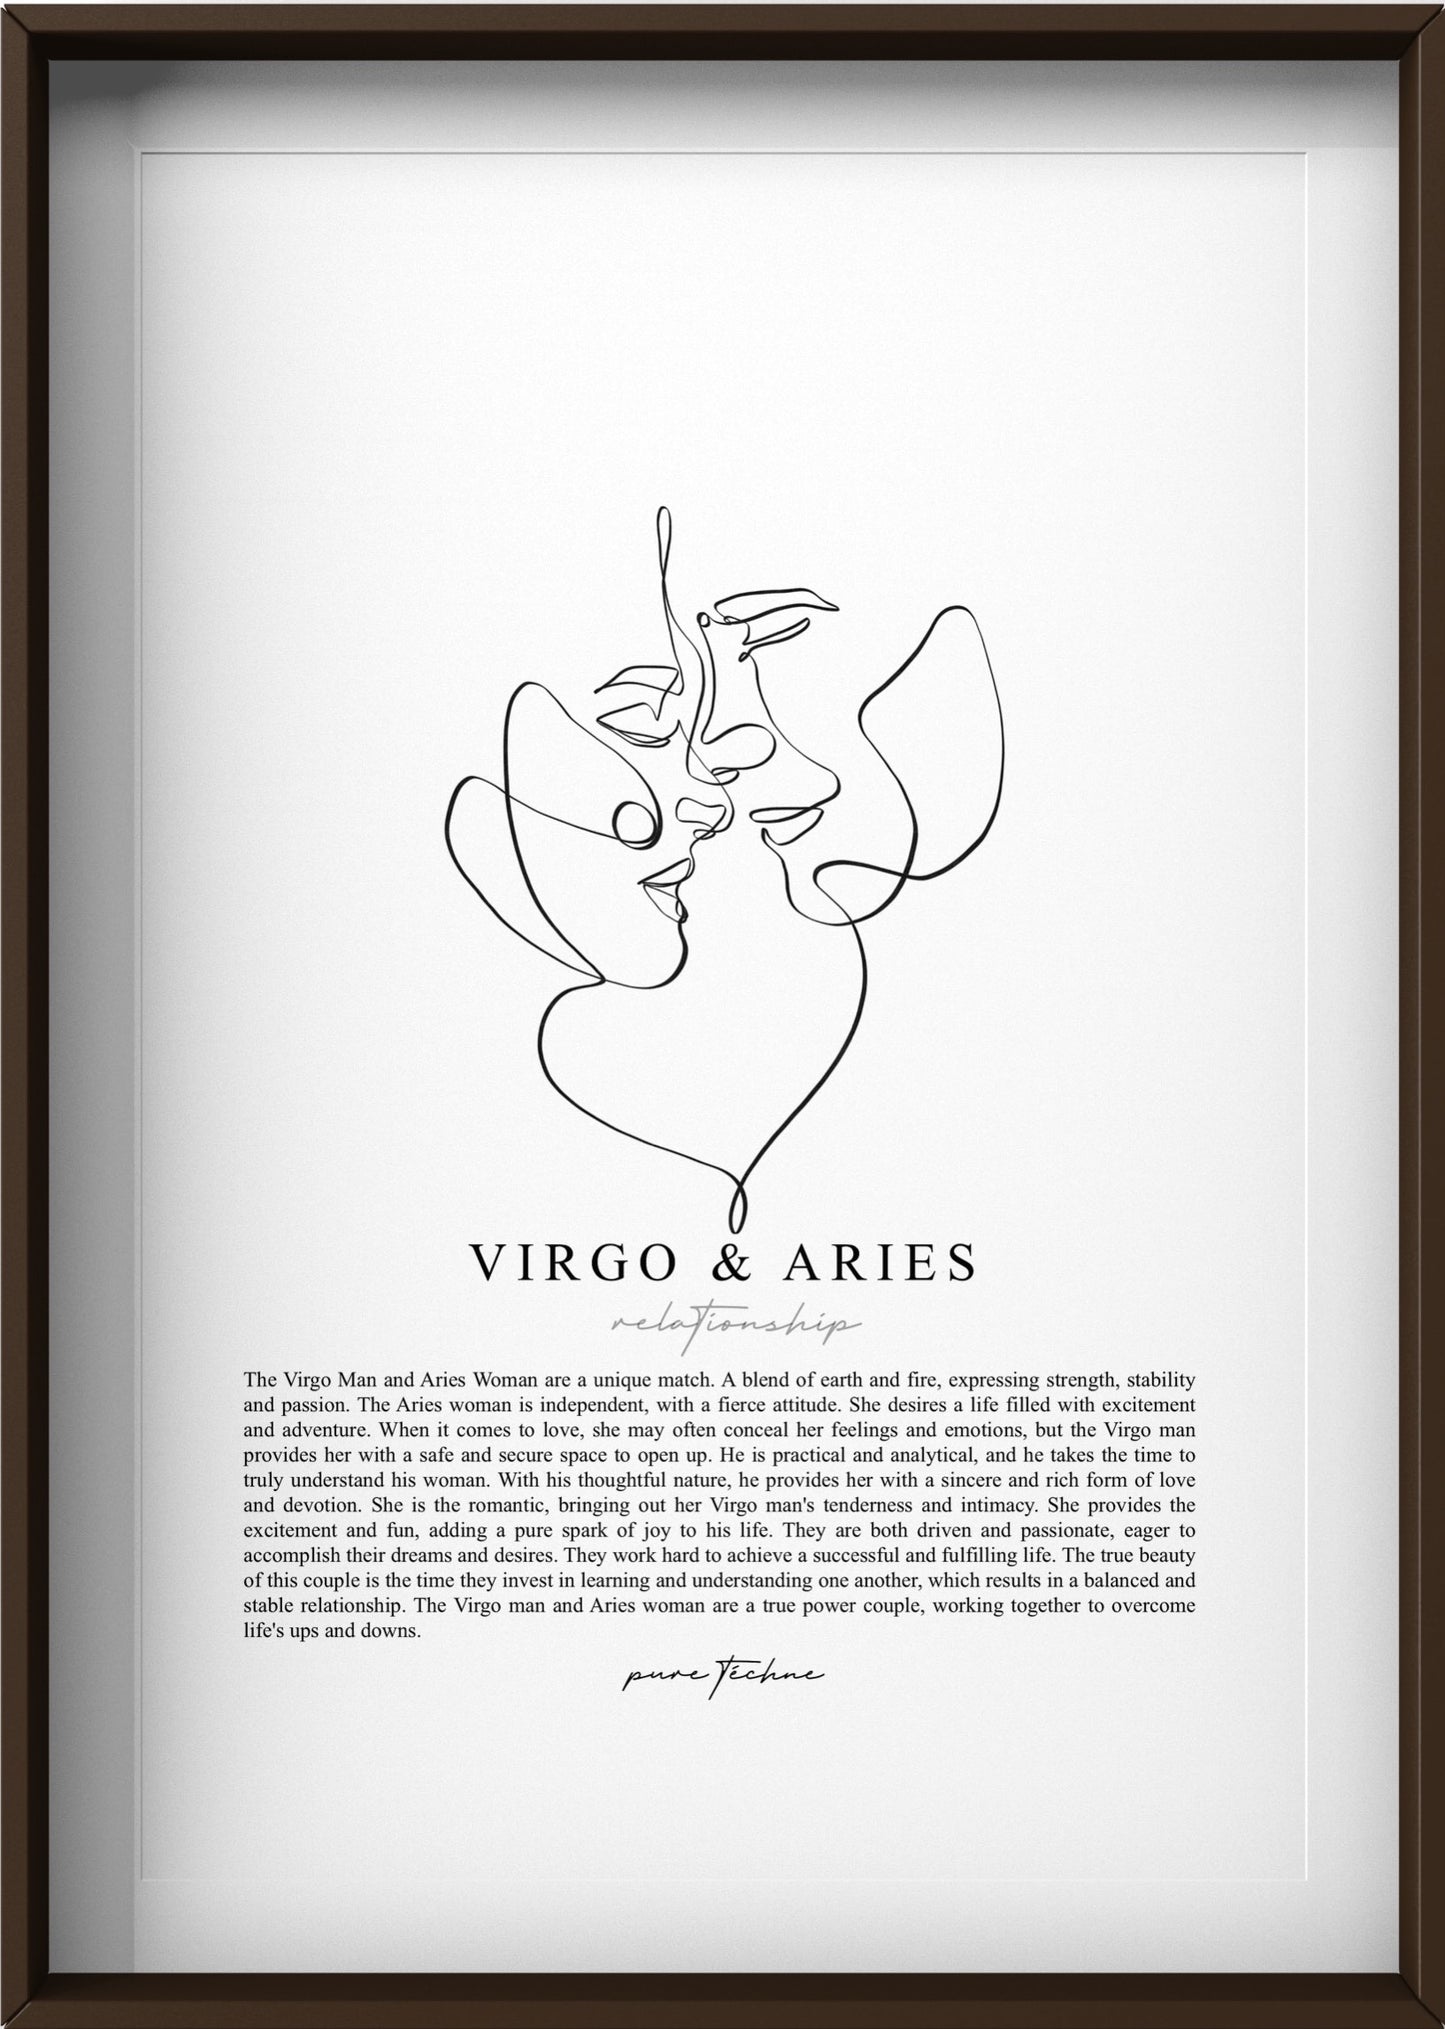 Virgo Man & Aries Woman